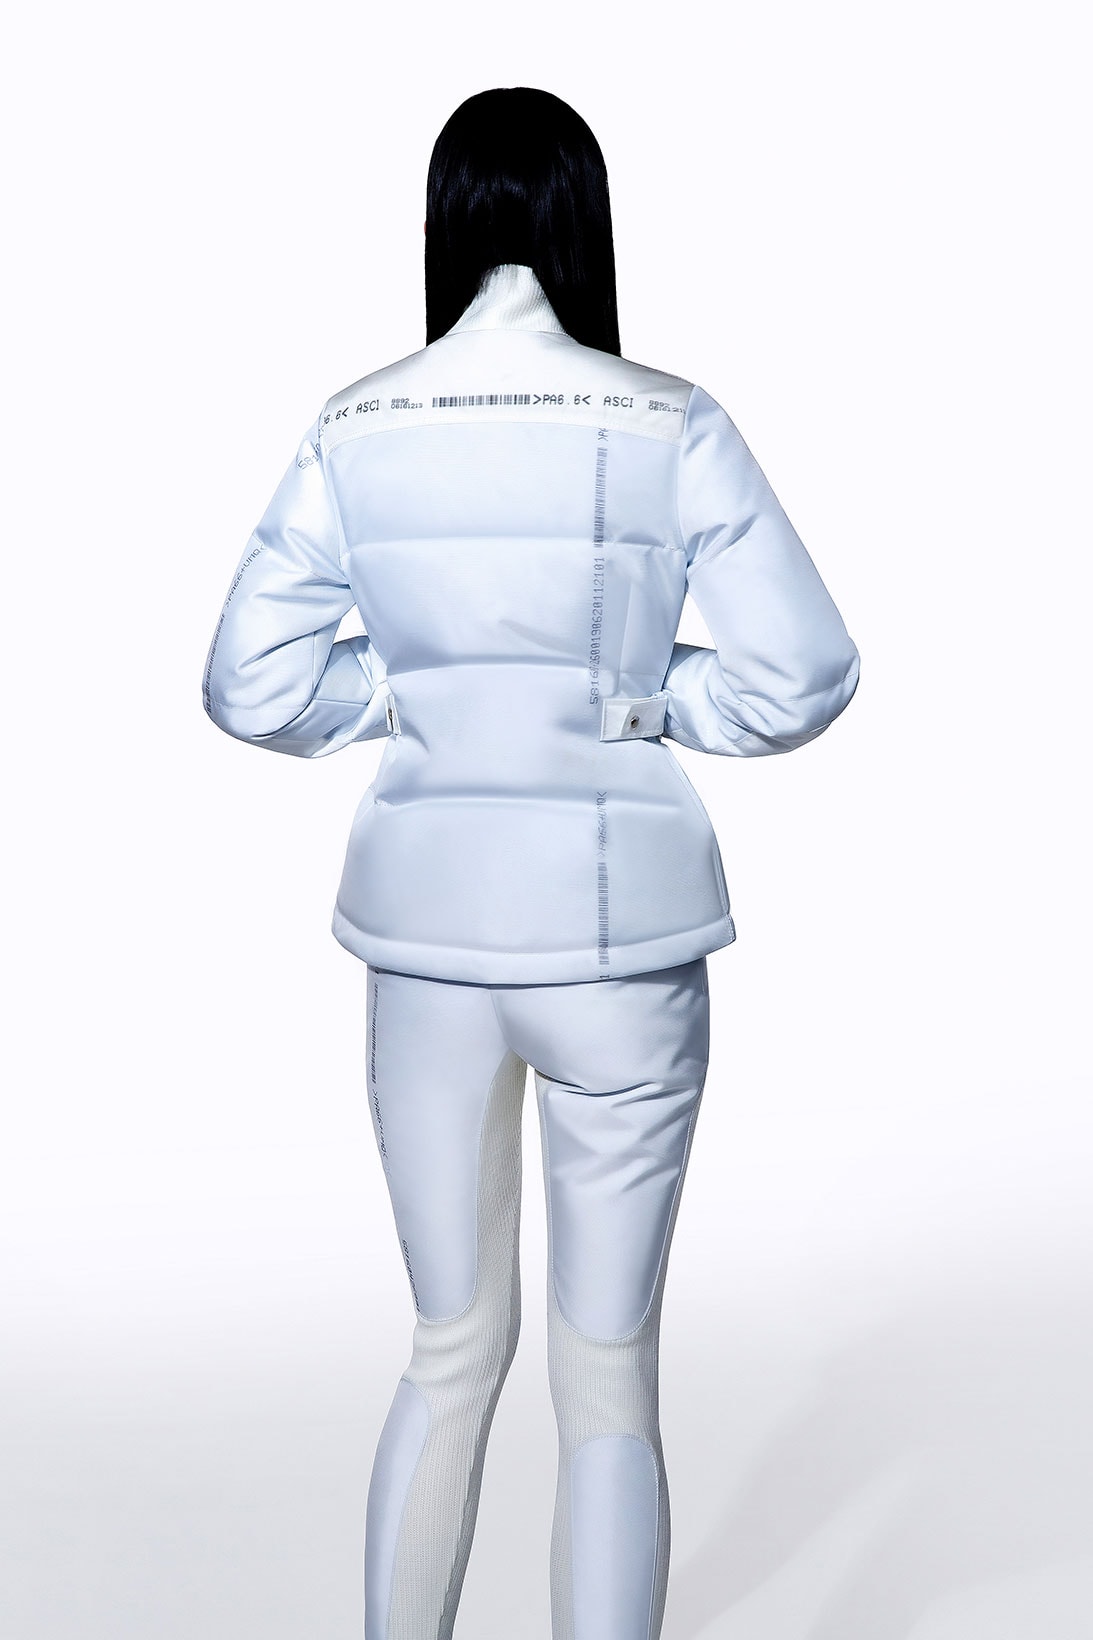 kanghyuk hyosung korean designer skiwear sustainable recycled airbags parkas jackets